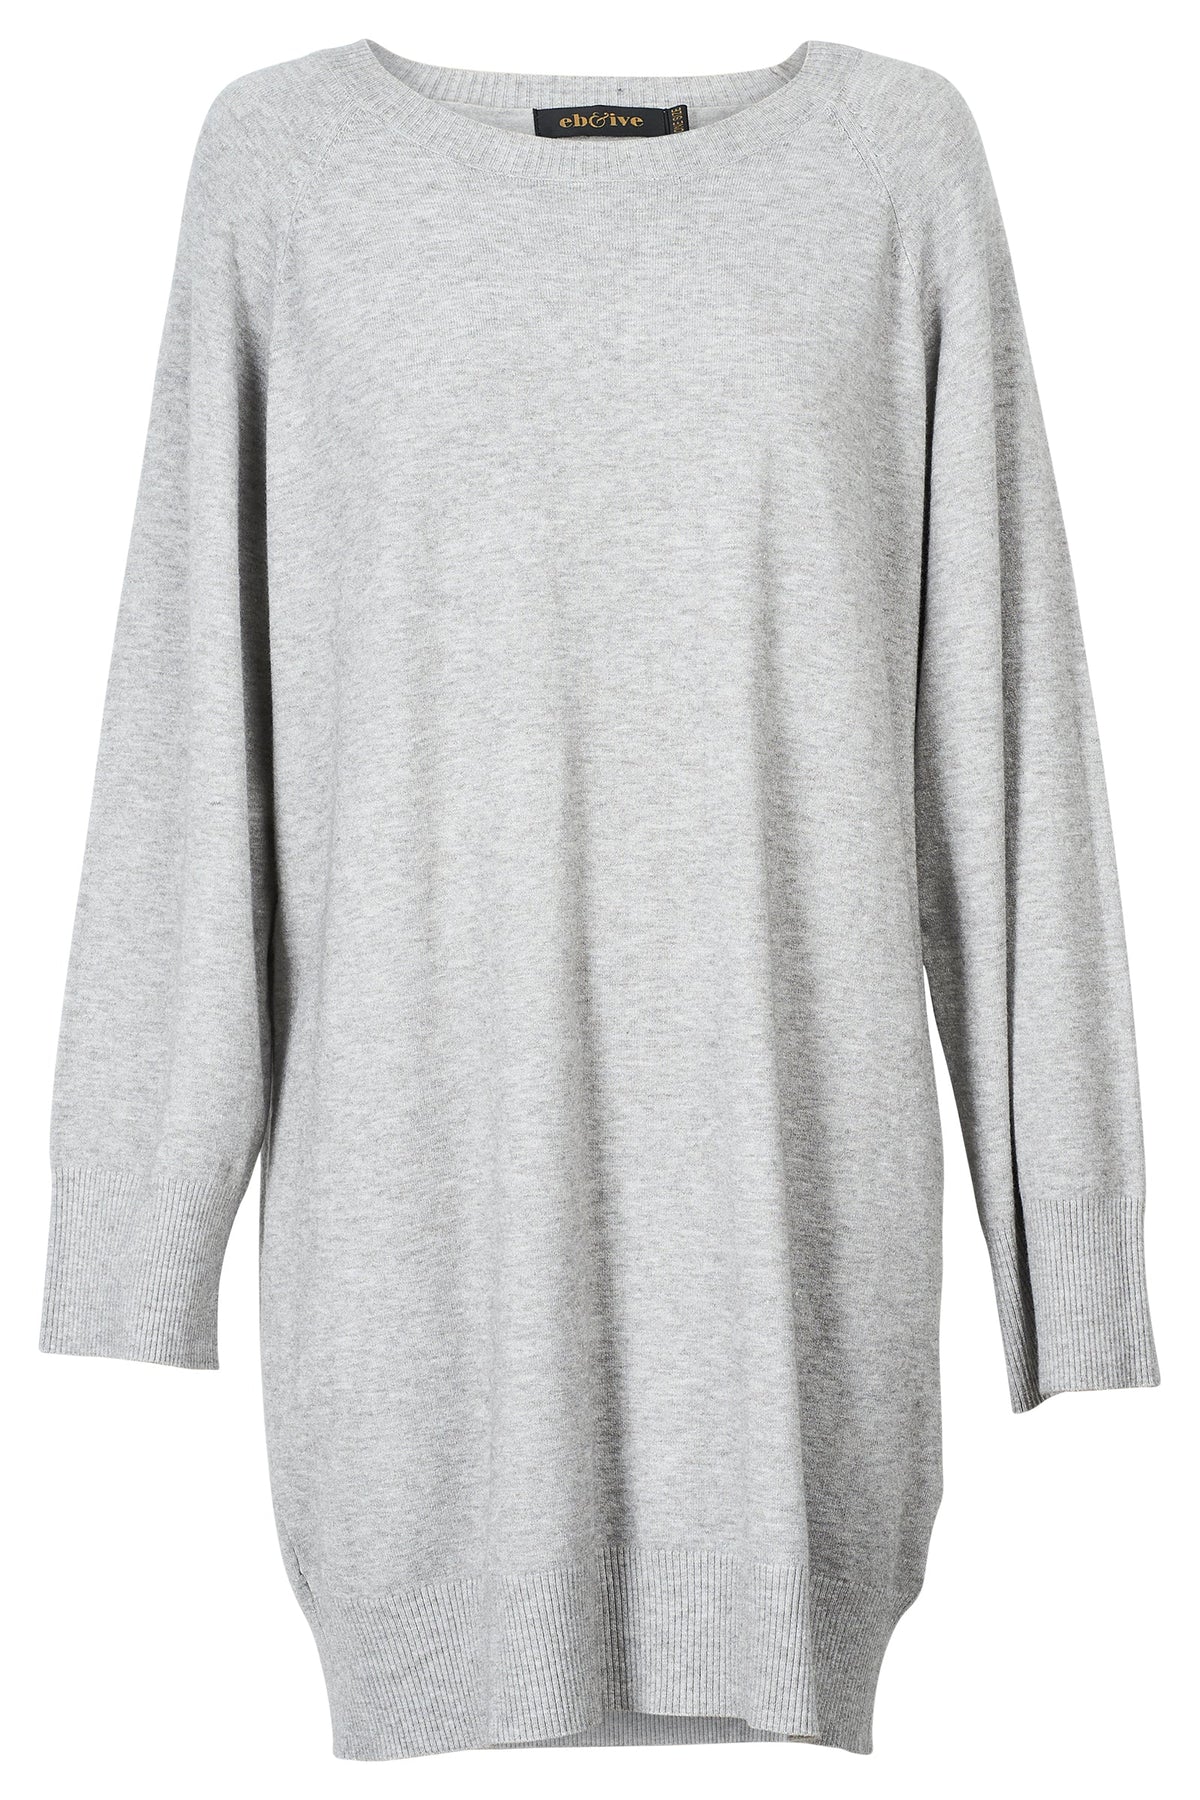 Gunyah Knit Top/Dress - EB & IVE Top One Size Marle NZ LUMA